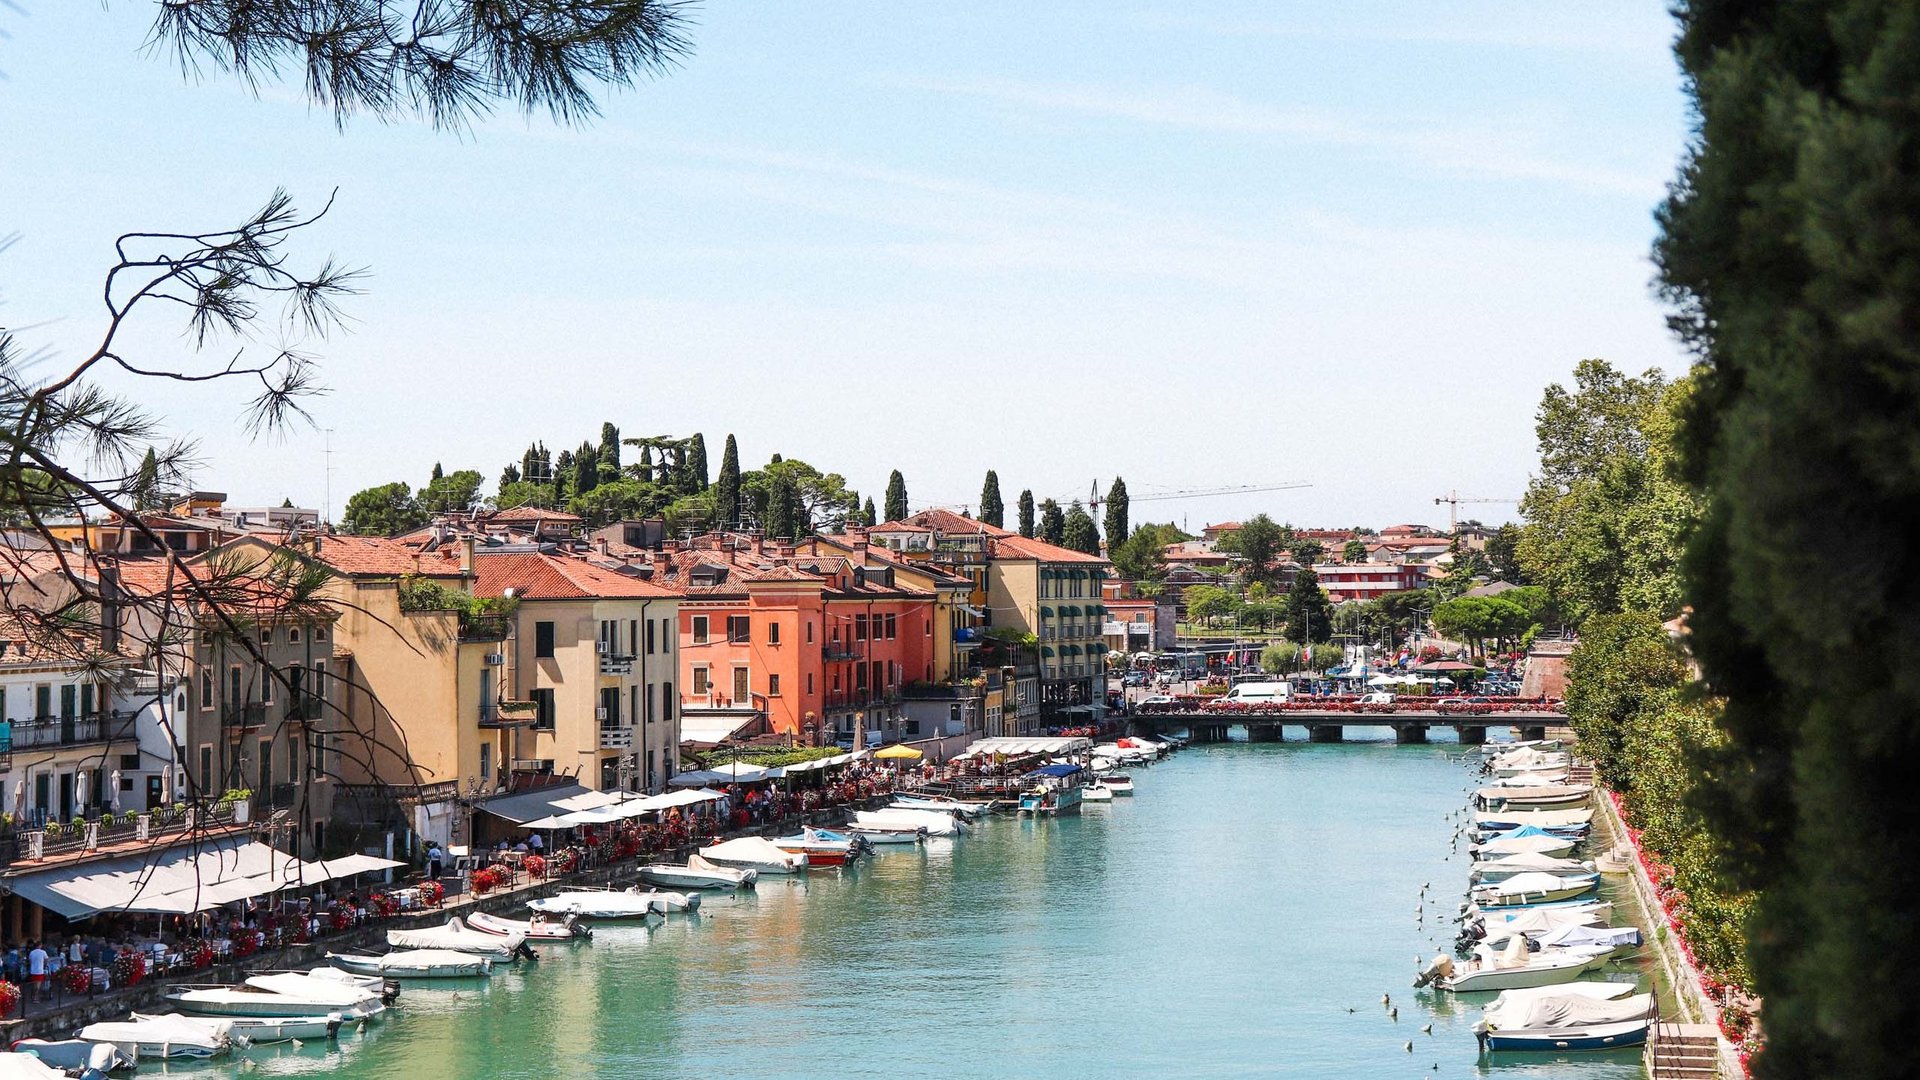 Excursions around Lake Garda: discover the area